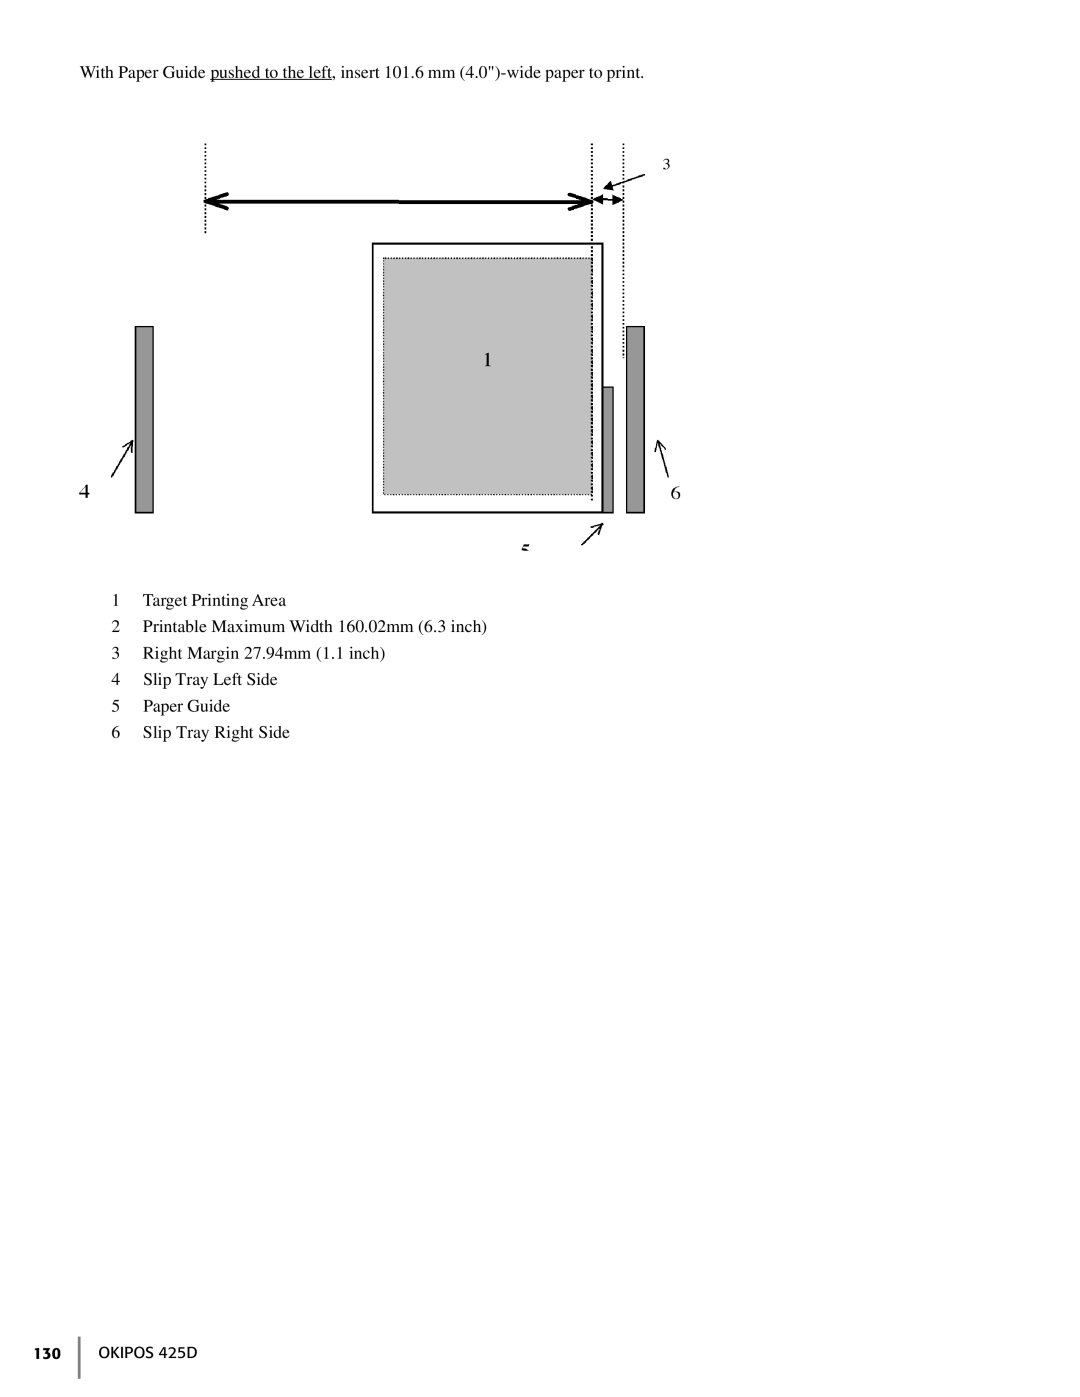 Oki manual Target Printing Area 2 Printable Maximum Width 160.02mm 6.3 inch, Slip Tray Right Side, OKIPOS 425D 